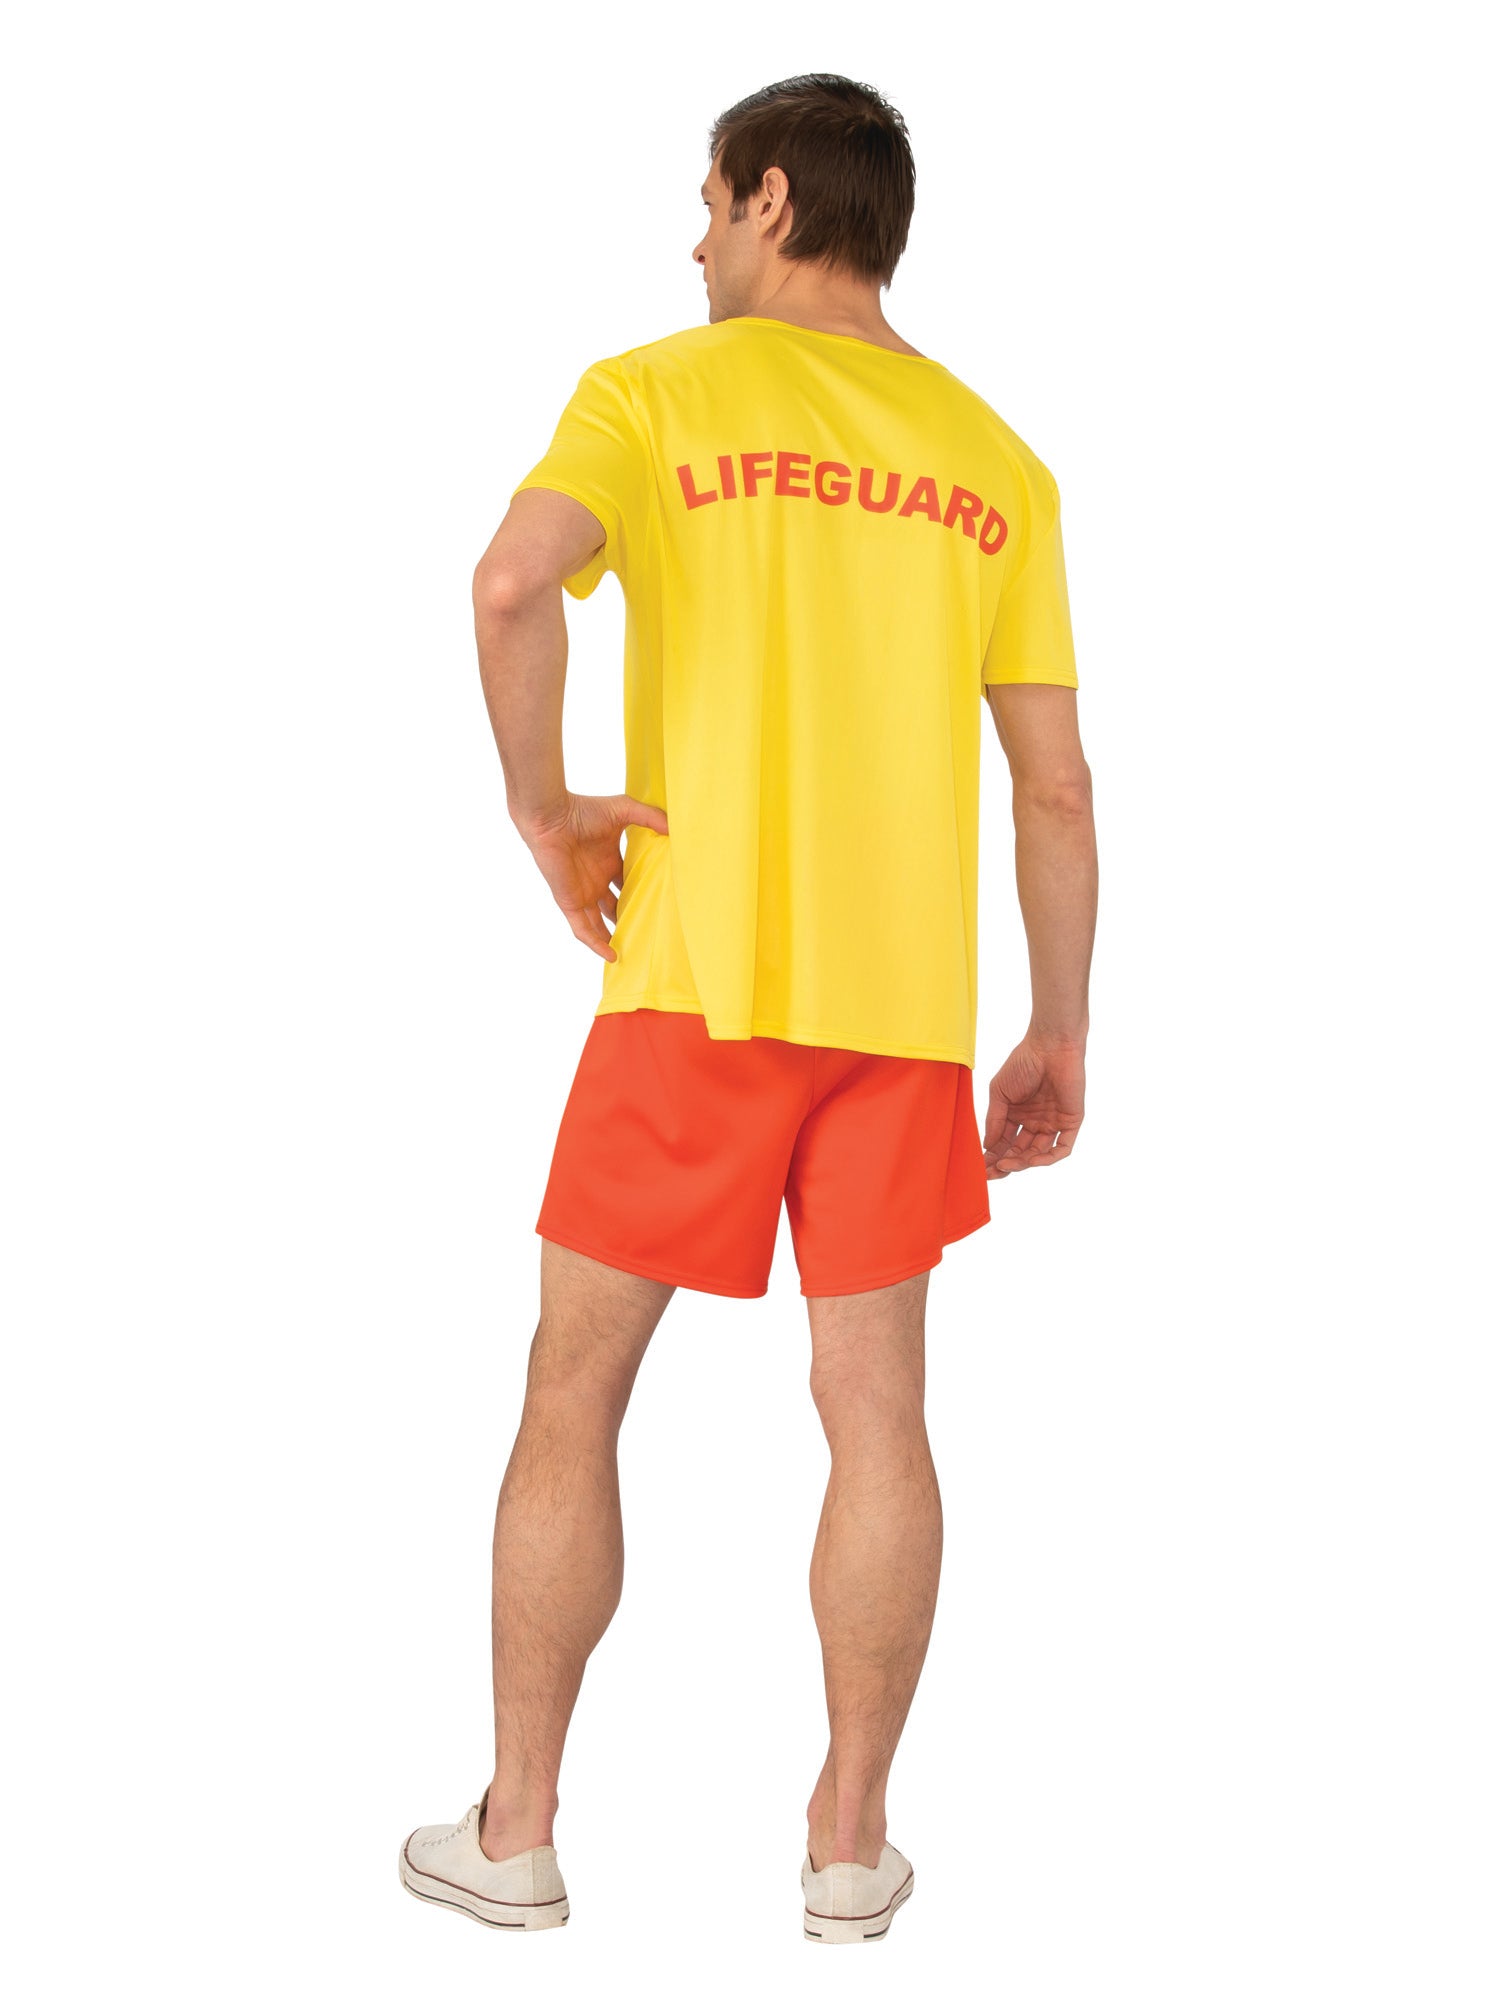 Lifeguard, Multi, Generic, Adult Costume, Standard, Back